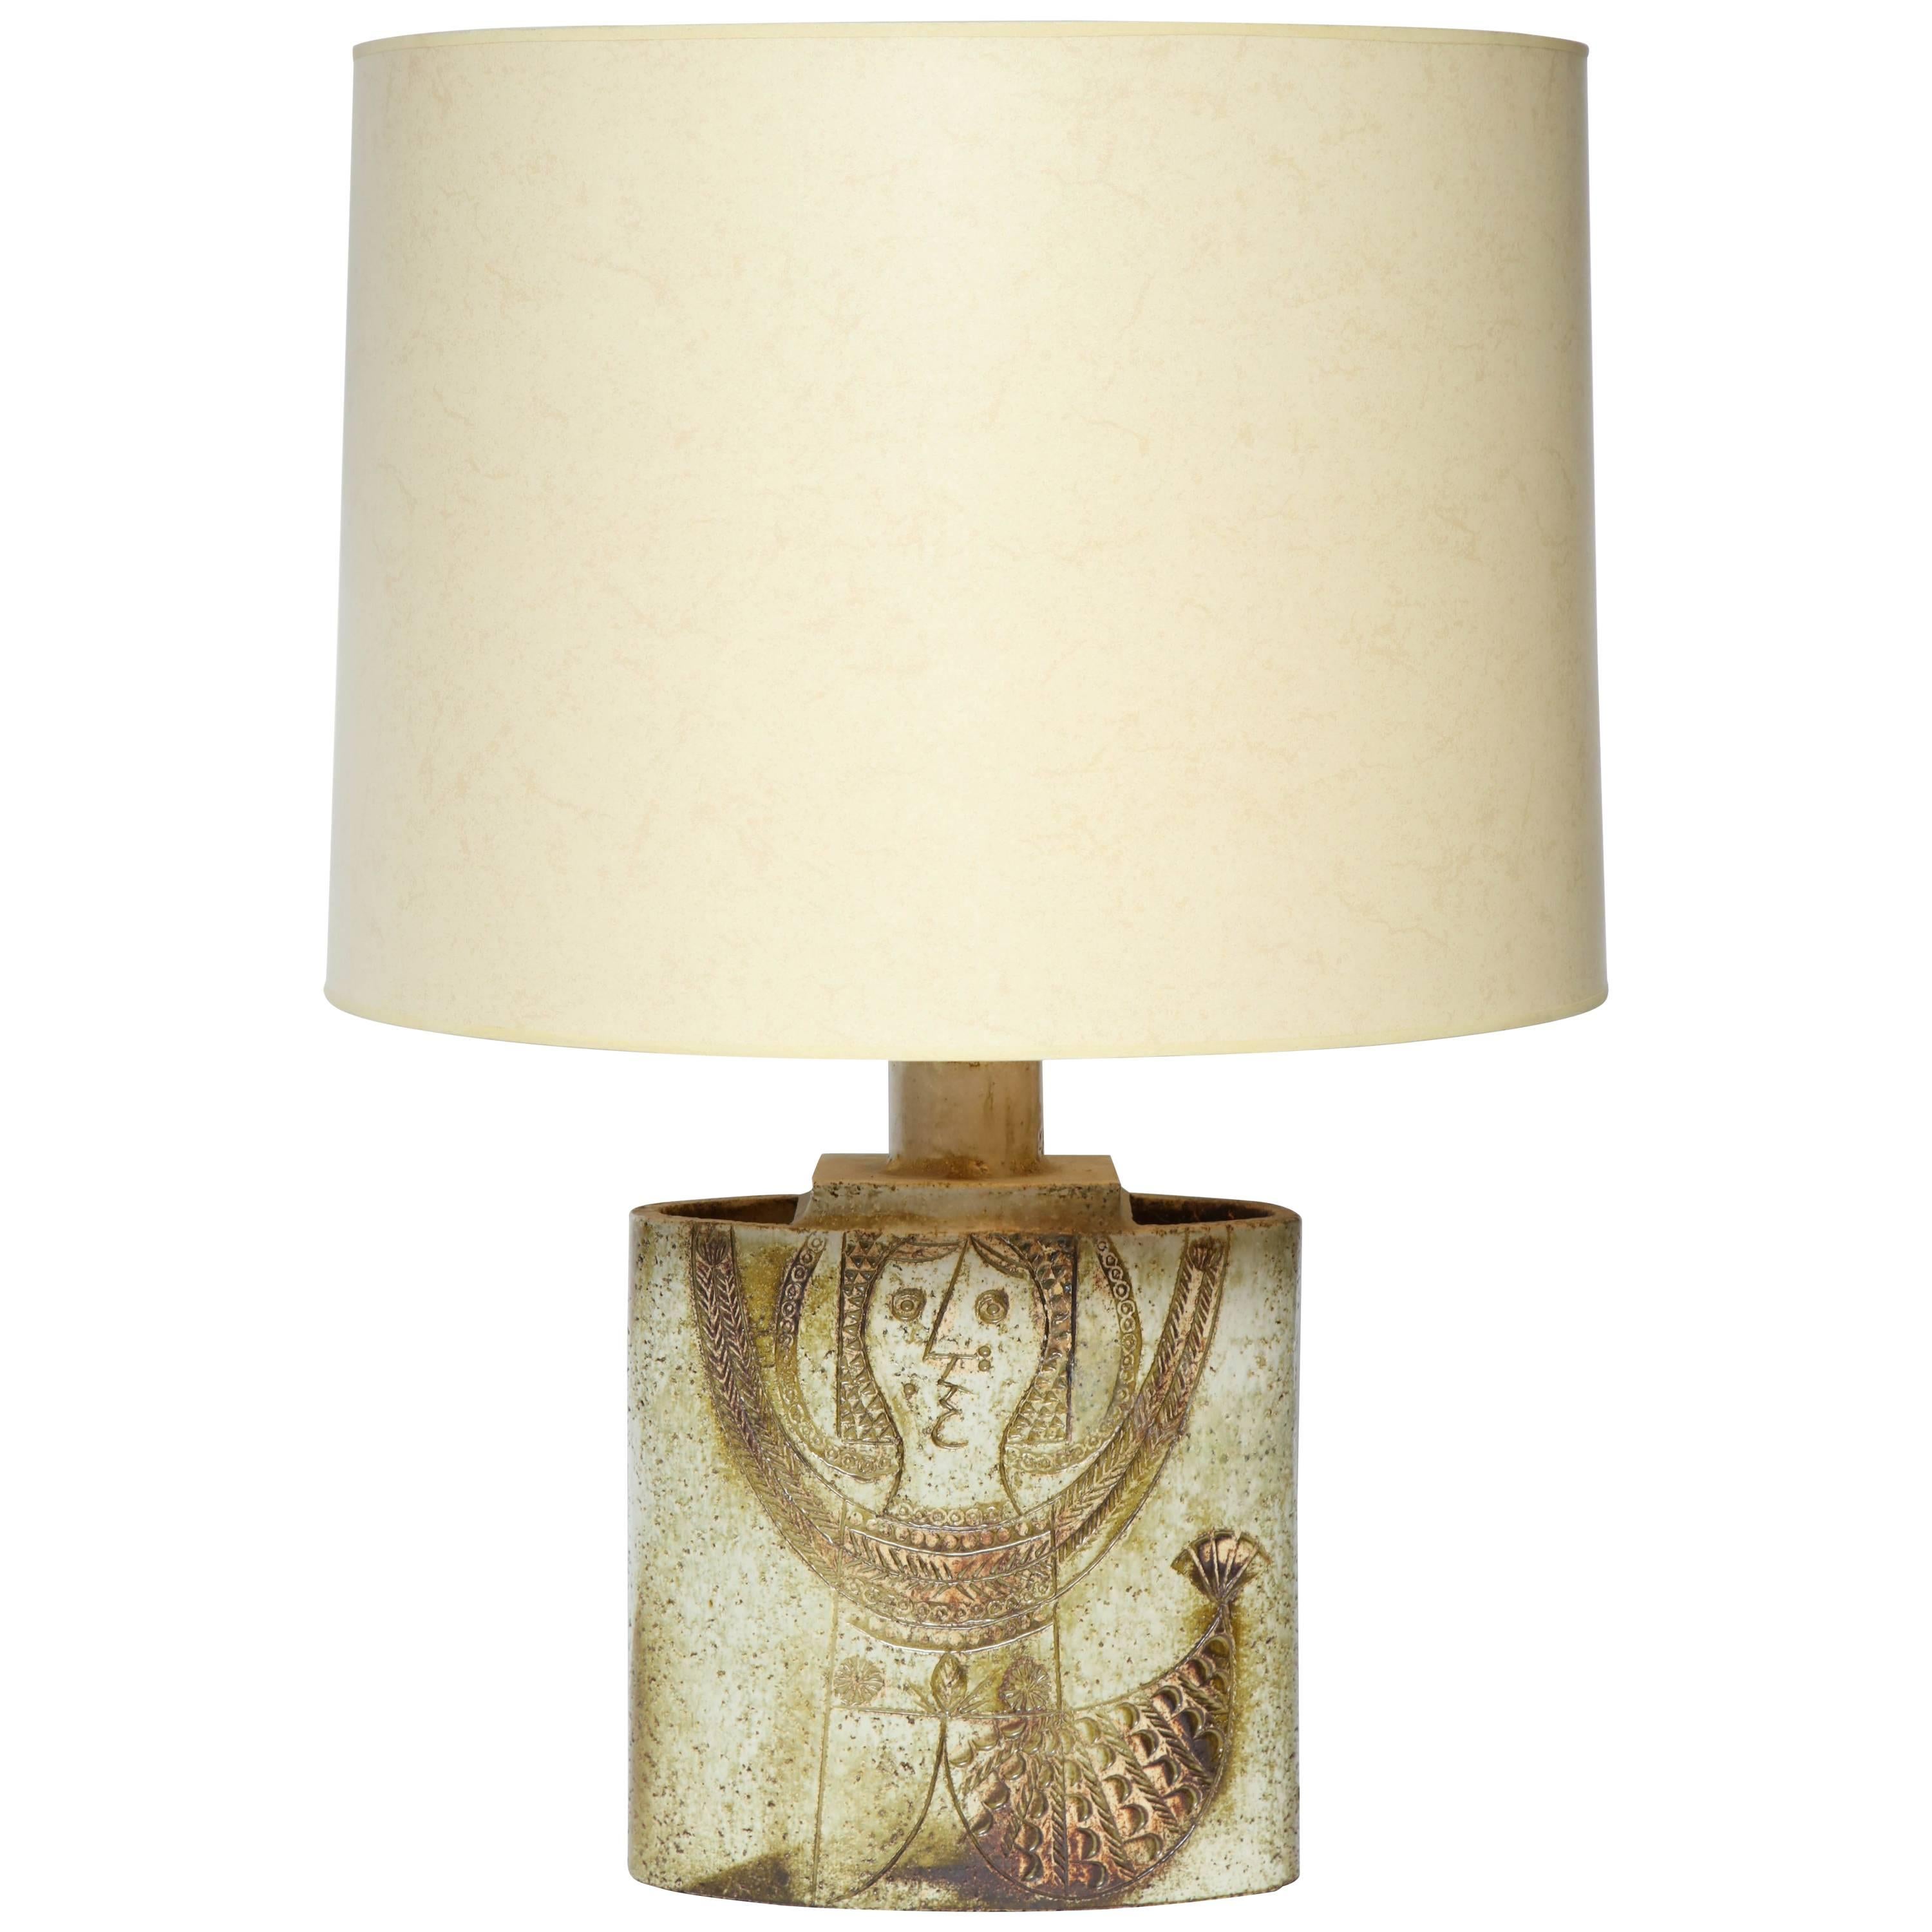 Mid-Century Modern Ceramic Table Lamp signed Capron Valauris Paris France